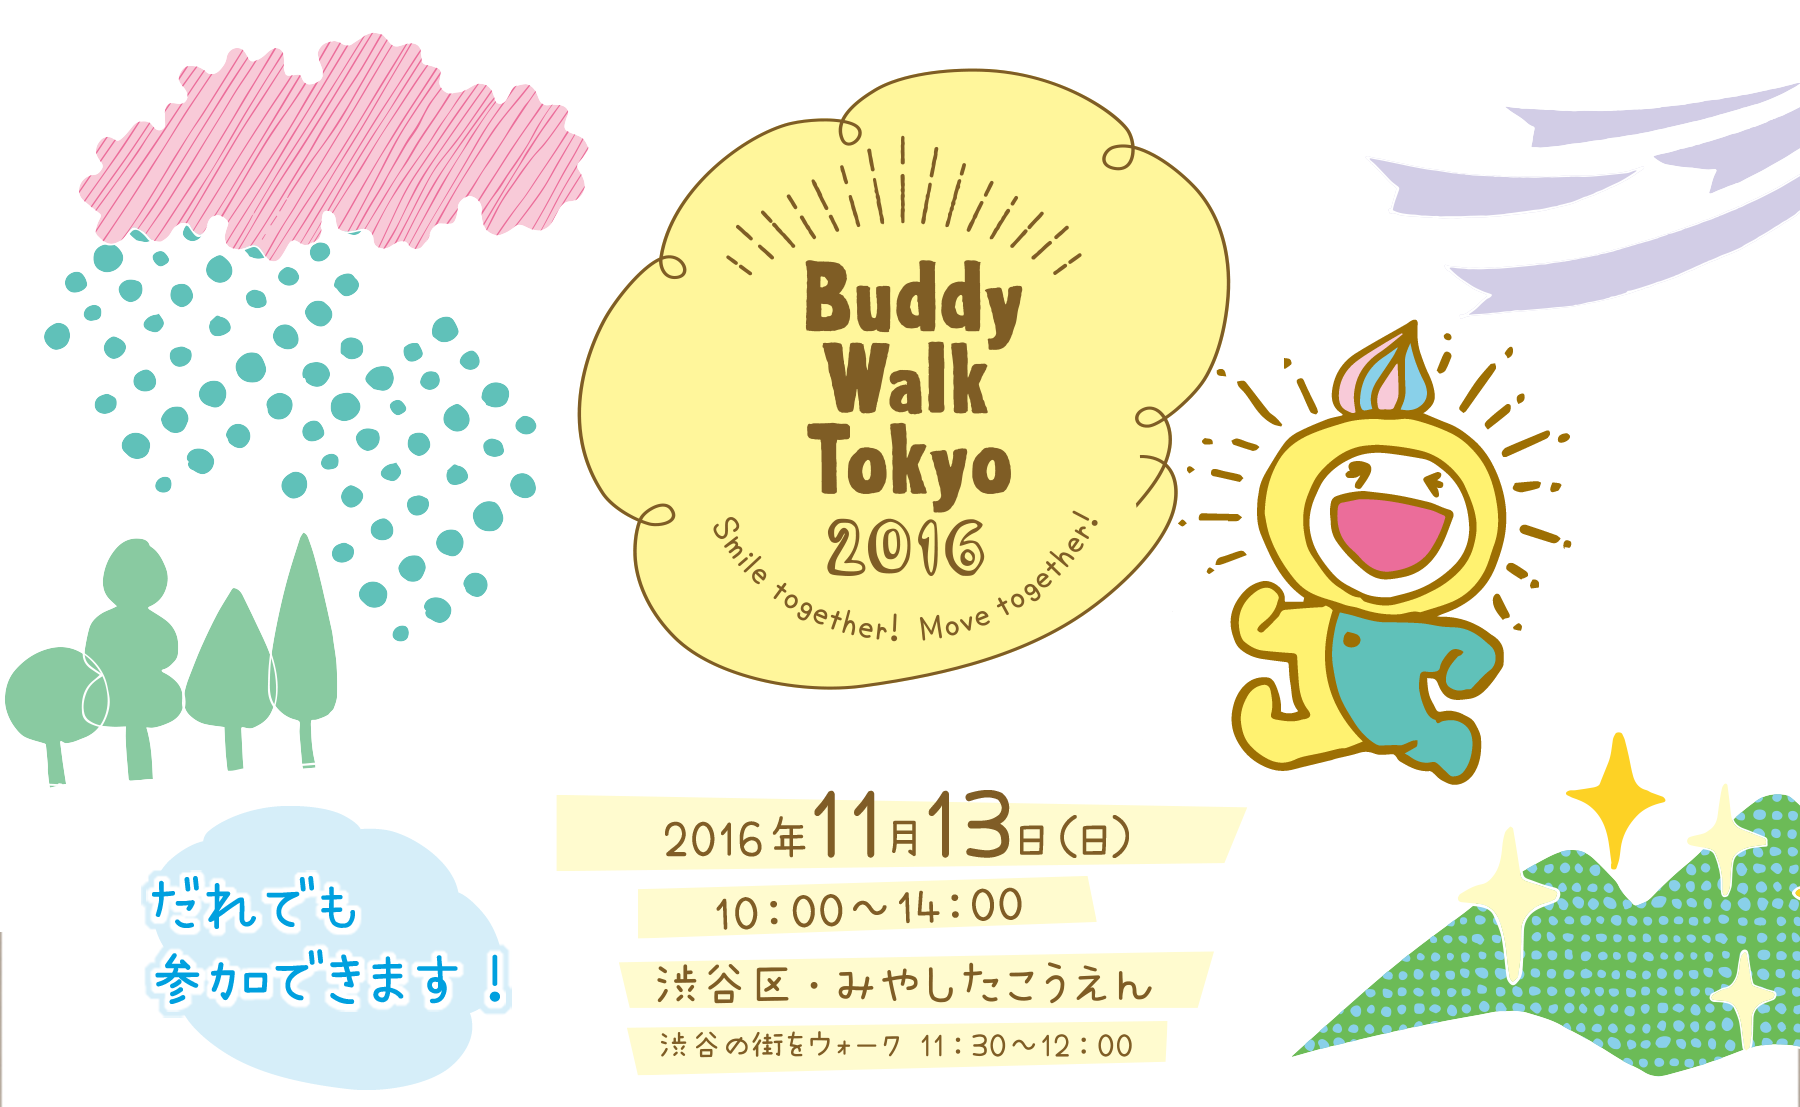 Buddy Walk Tokyo 2016 Walk together! Move together!